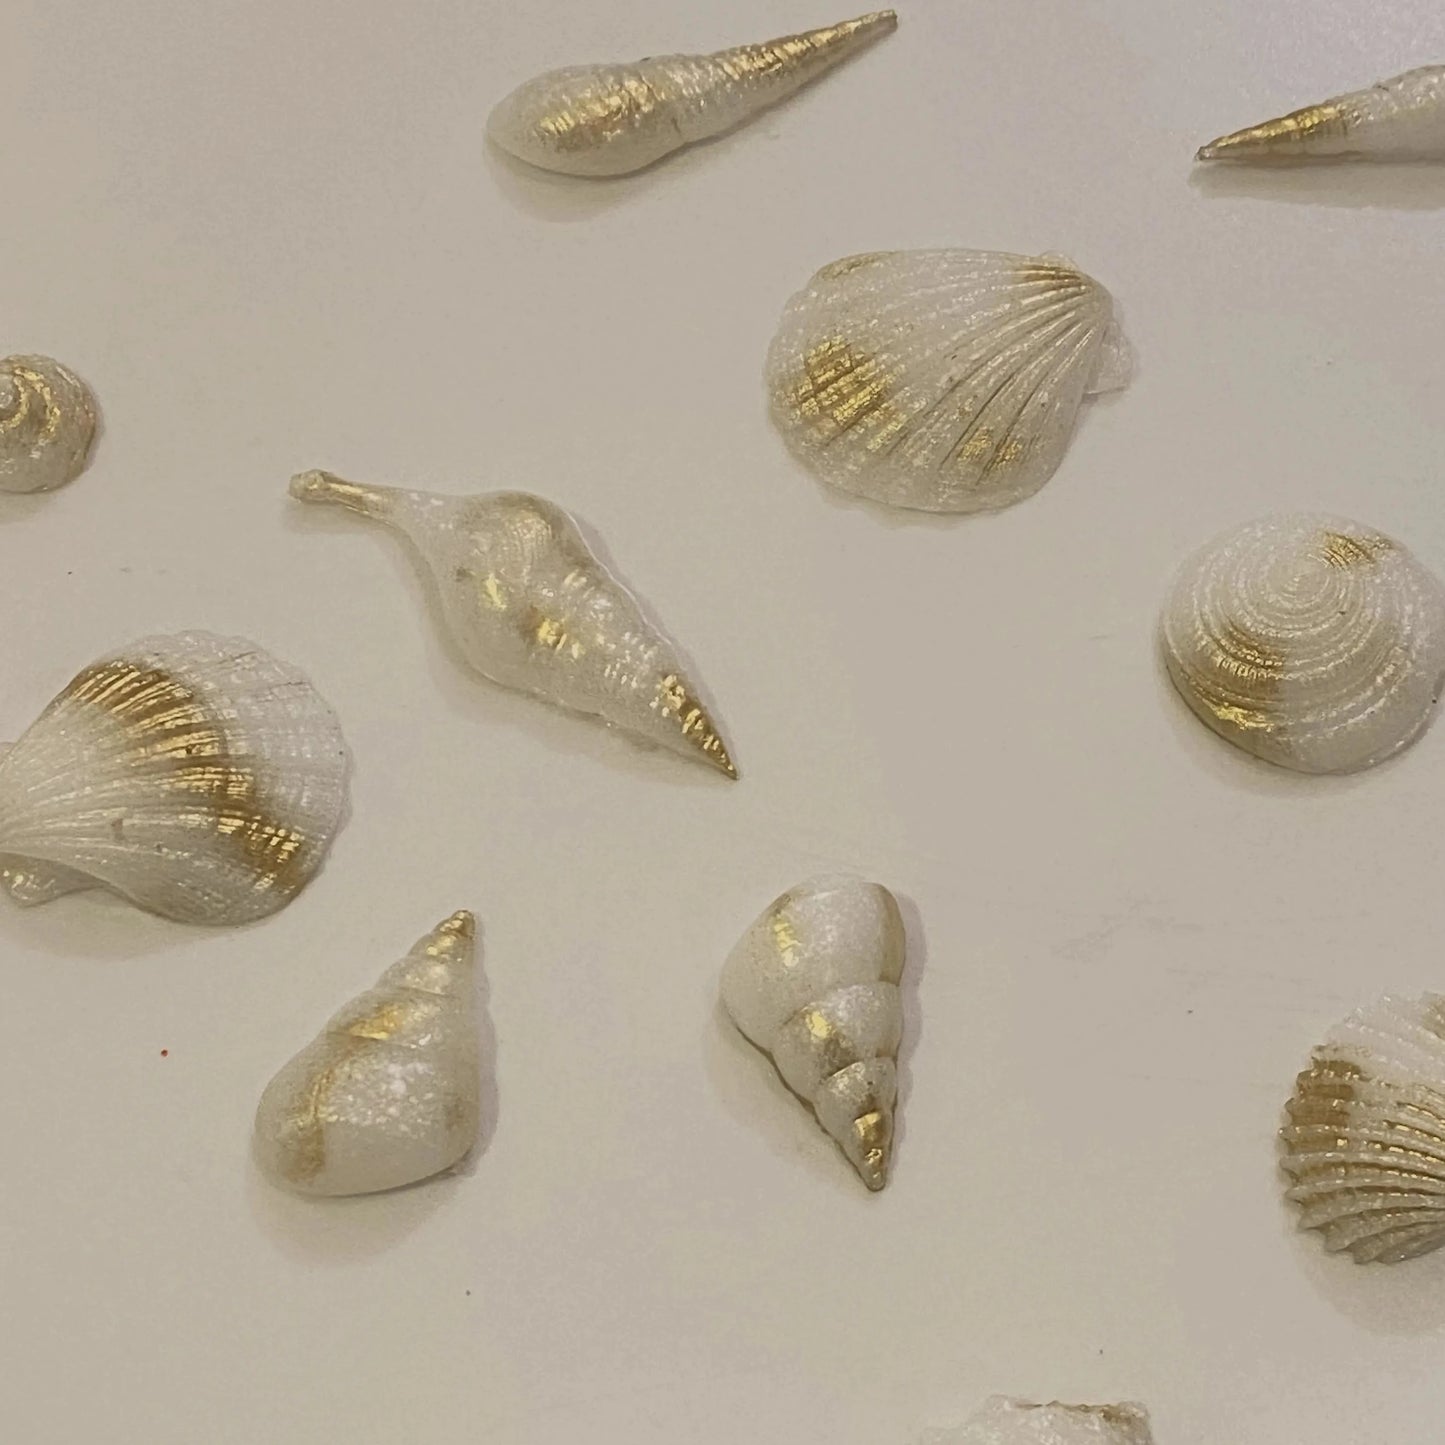 Sally Sells Sea shells